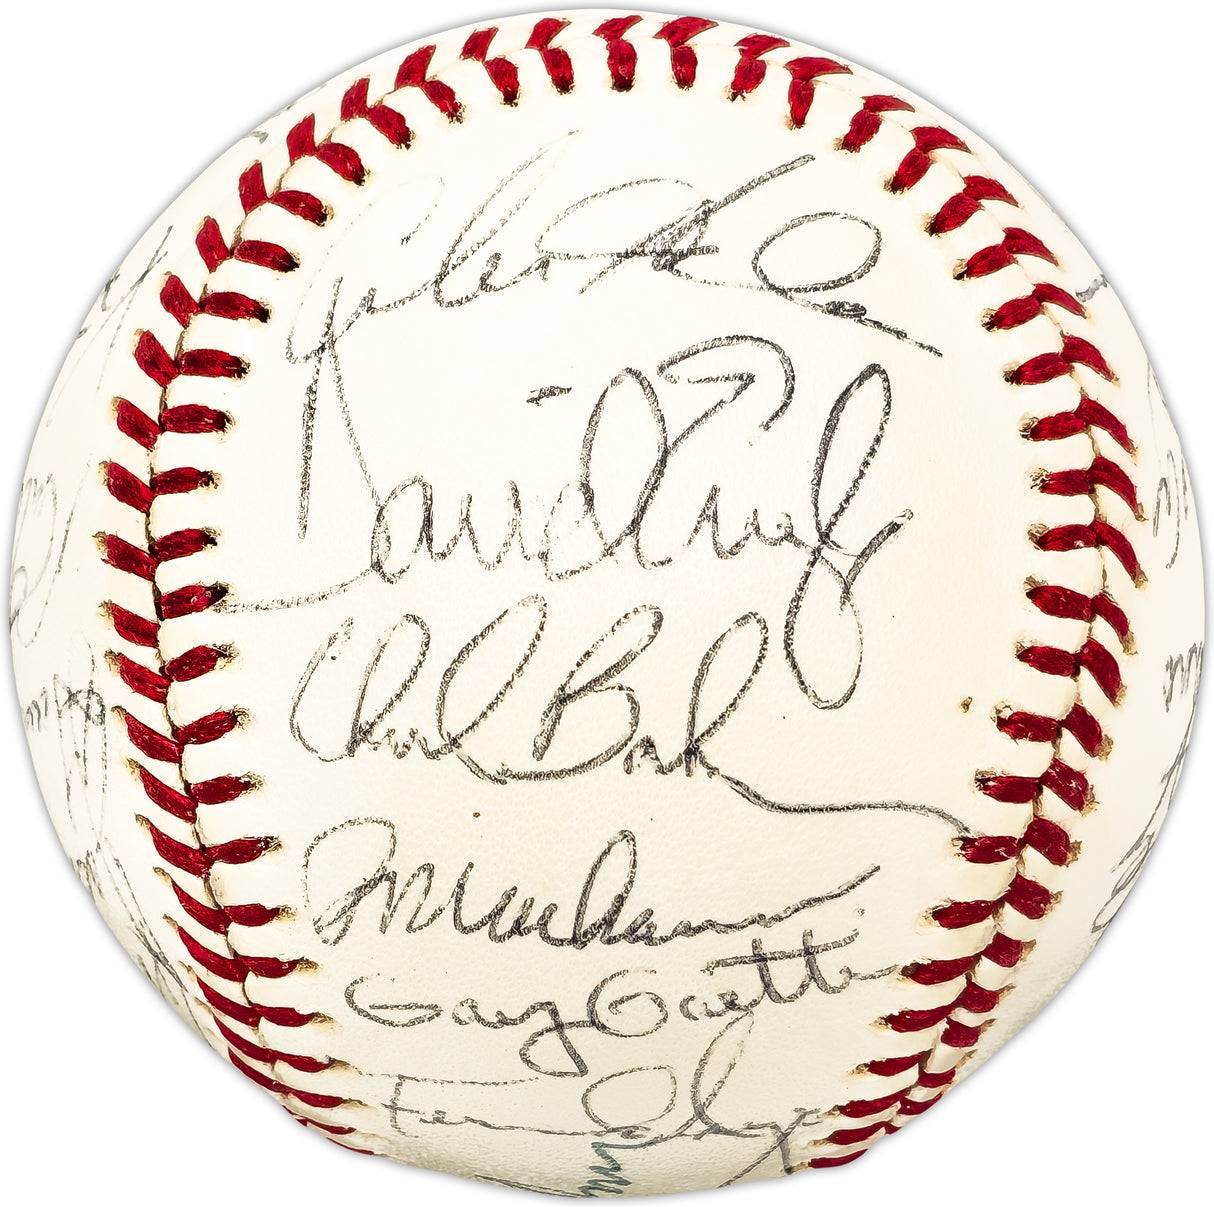 1981 Minnesota Twins Team Autographed Official Spalding MLB Baseball With 23 Signatures SKU #225432